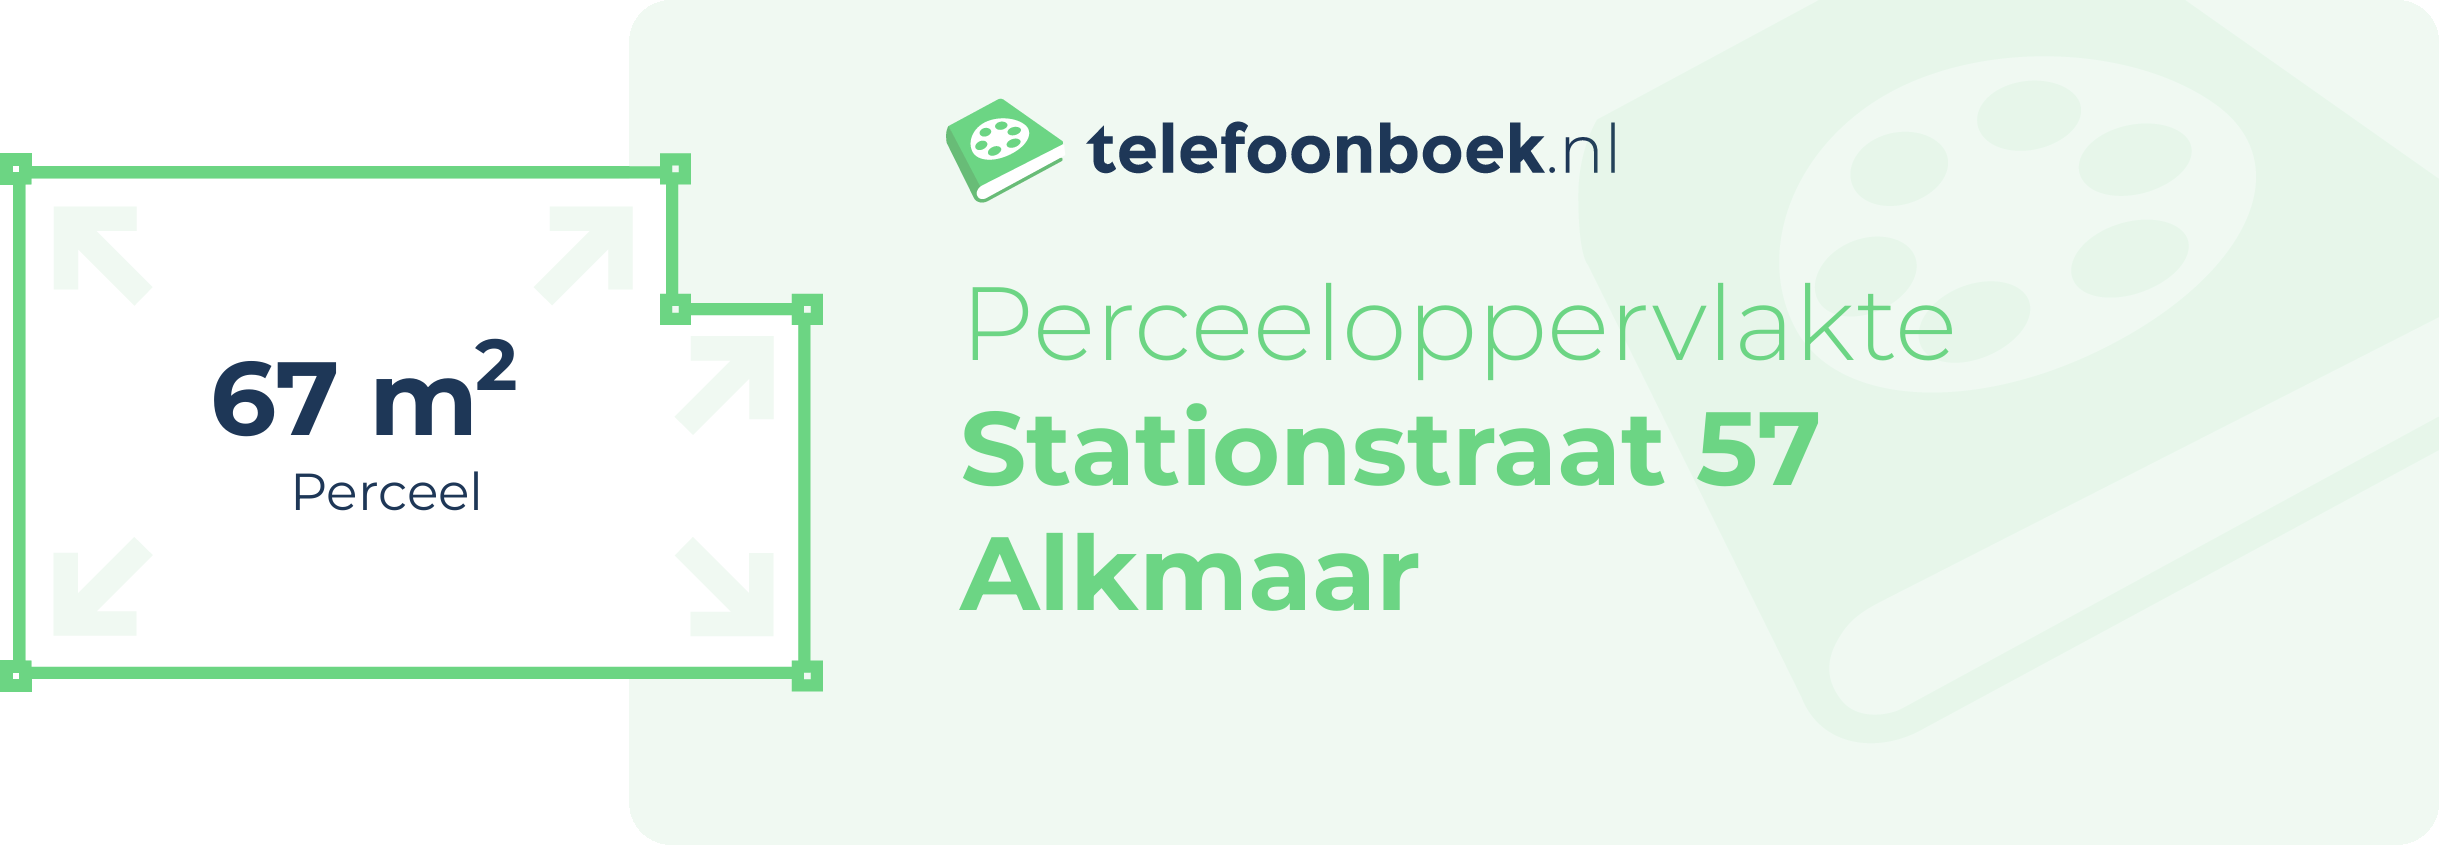 Perceeloppervlakte Stationstraat 57 Alkmaar